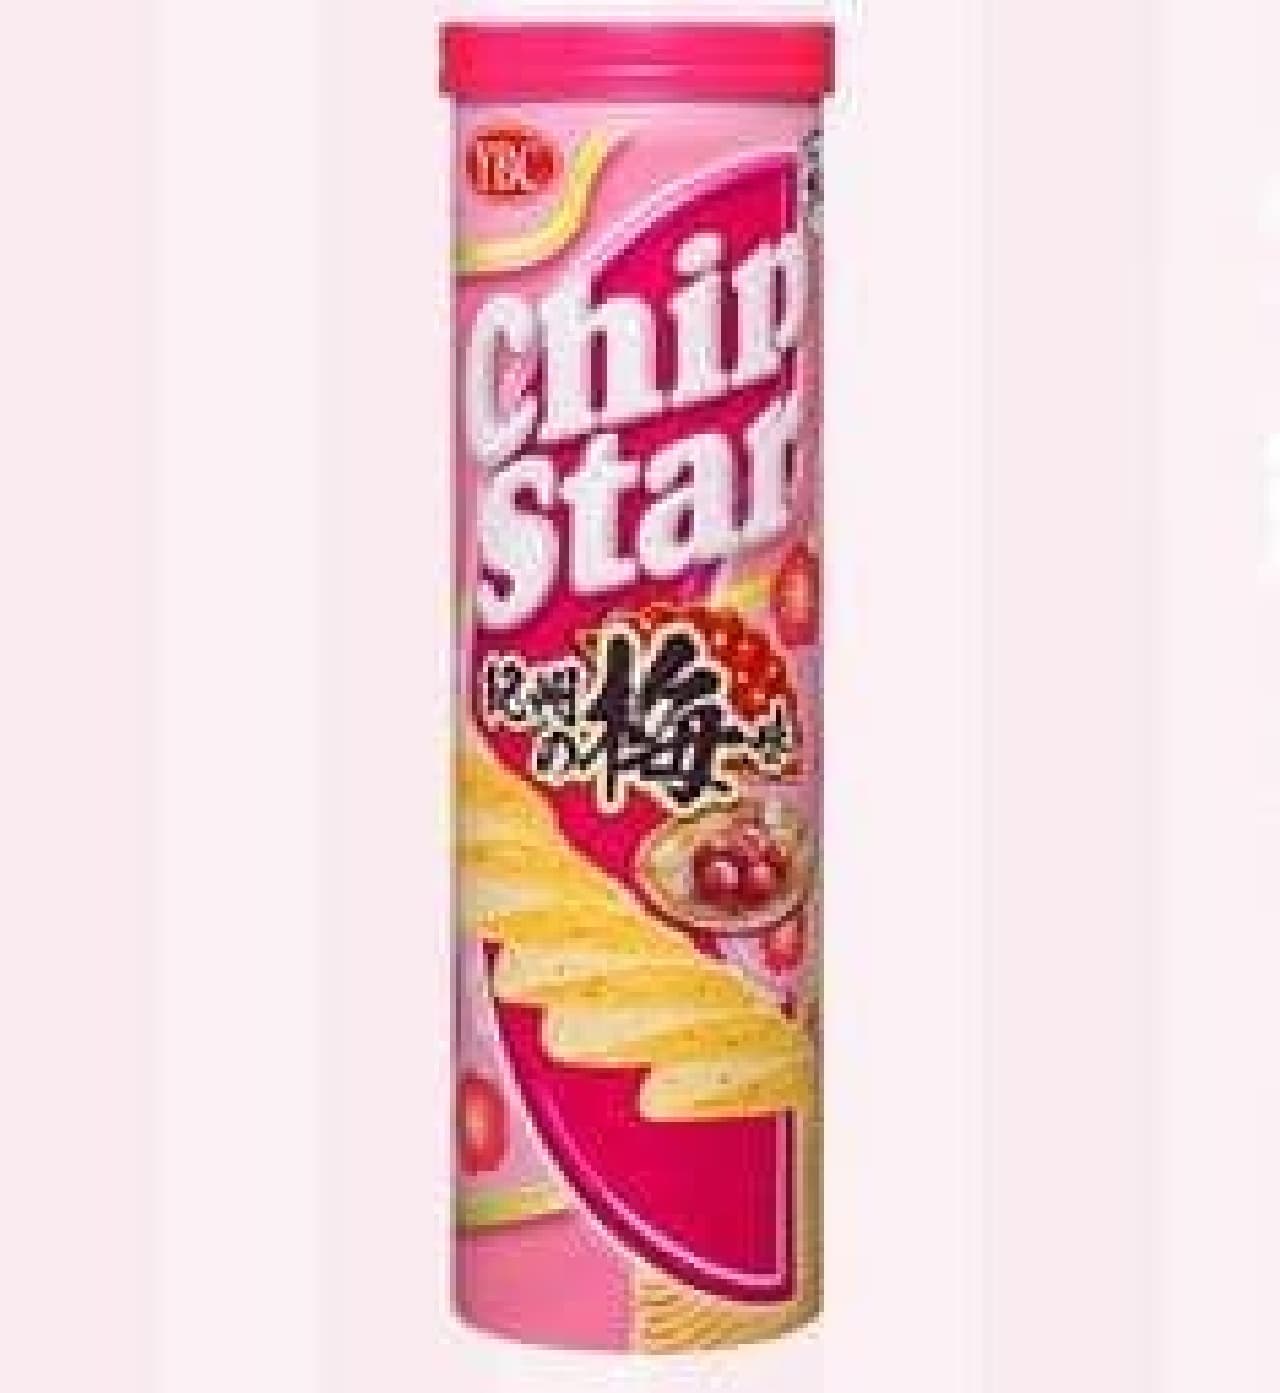 Yamazaki Biscuits "Chip Star L Kishu Plum Flavor"